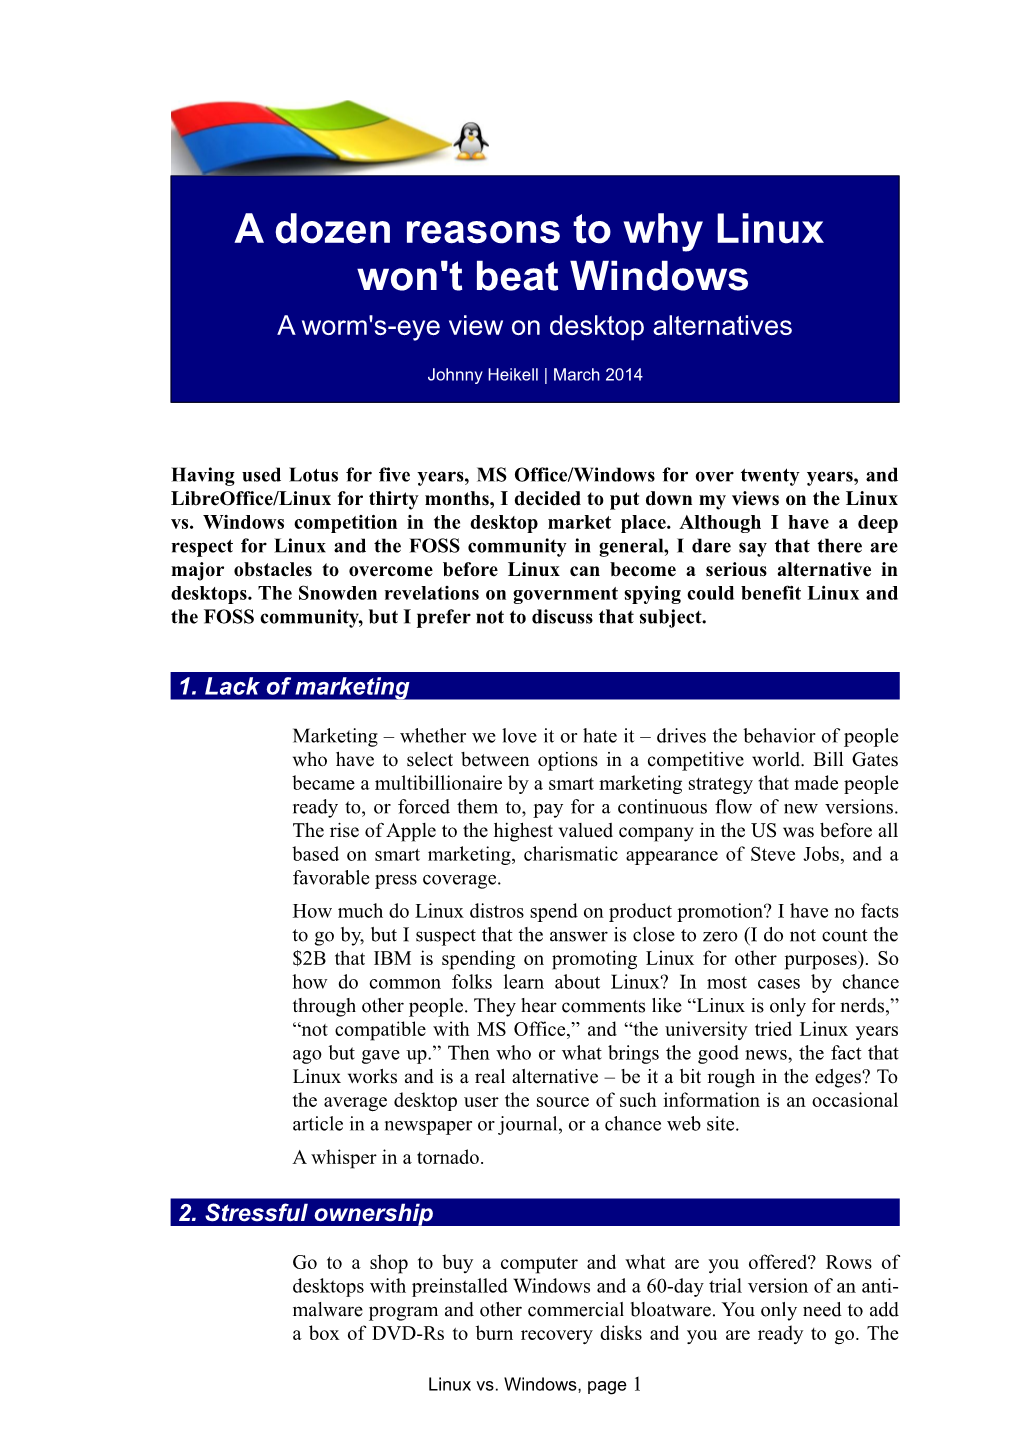 A Dozen Reasons to Why Linux Won't Beat Windows a Worm's-Eye View on Desktop Alternatives